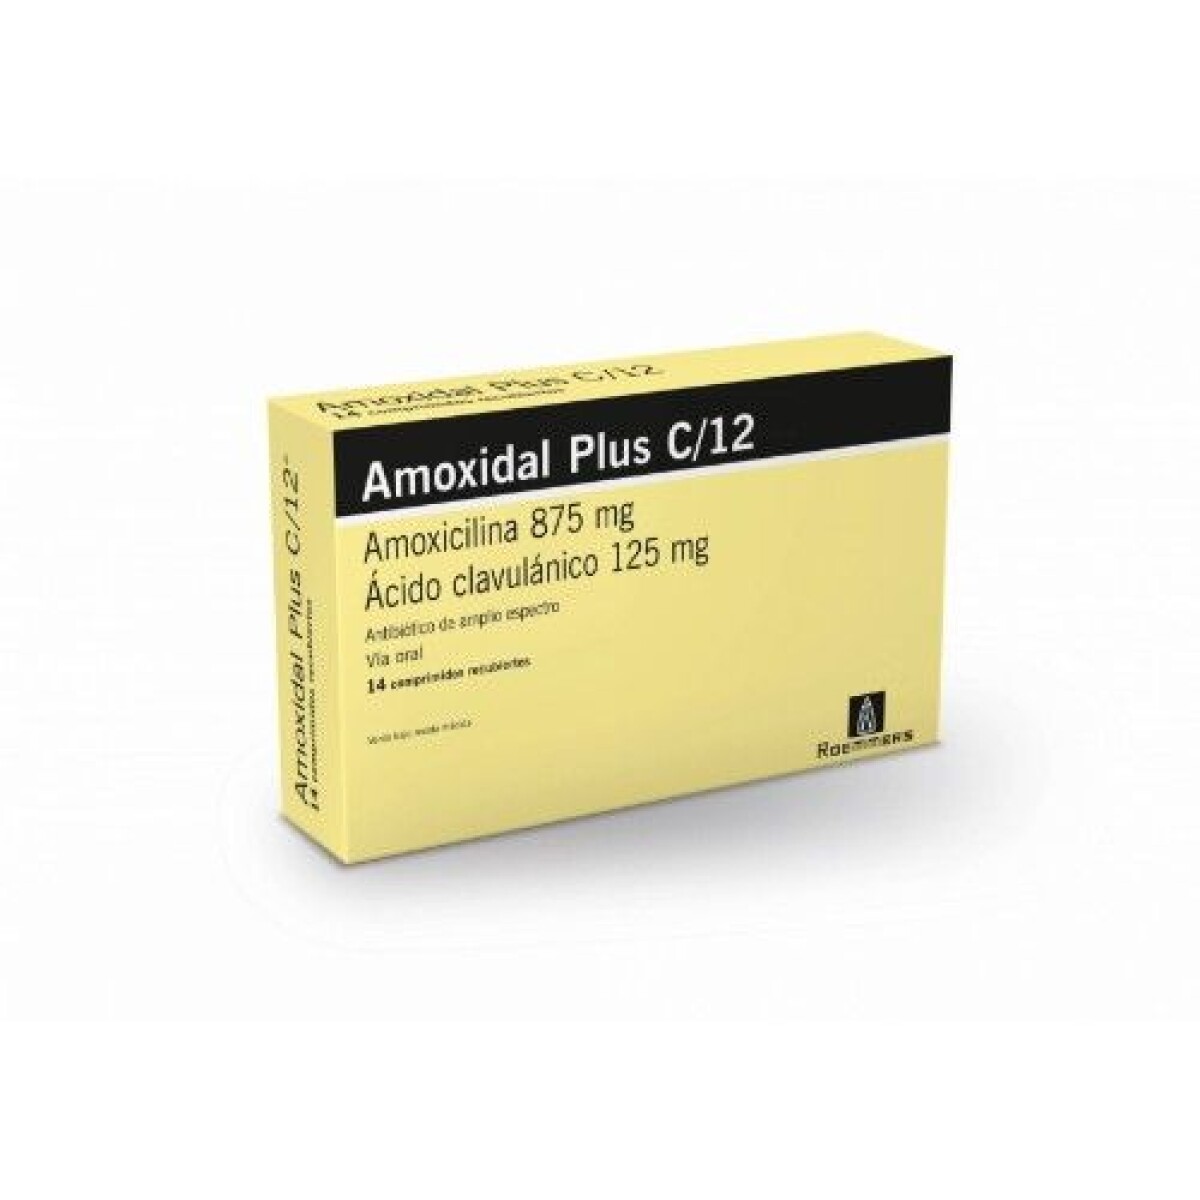 Amoxidal plus c/12 14 comp 